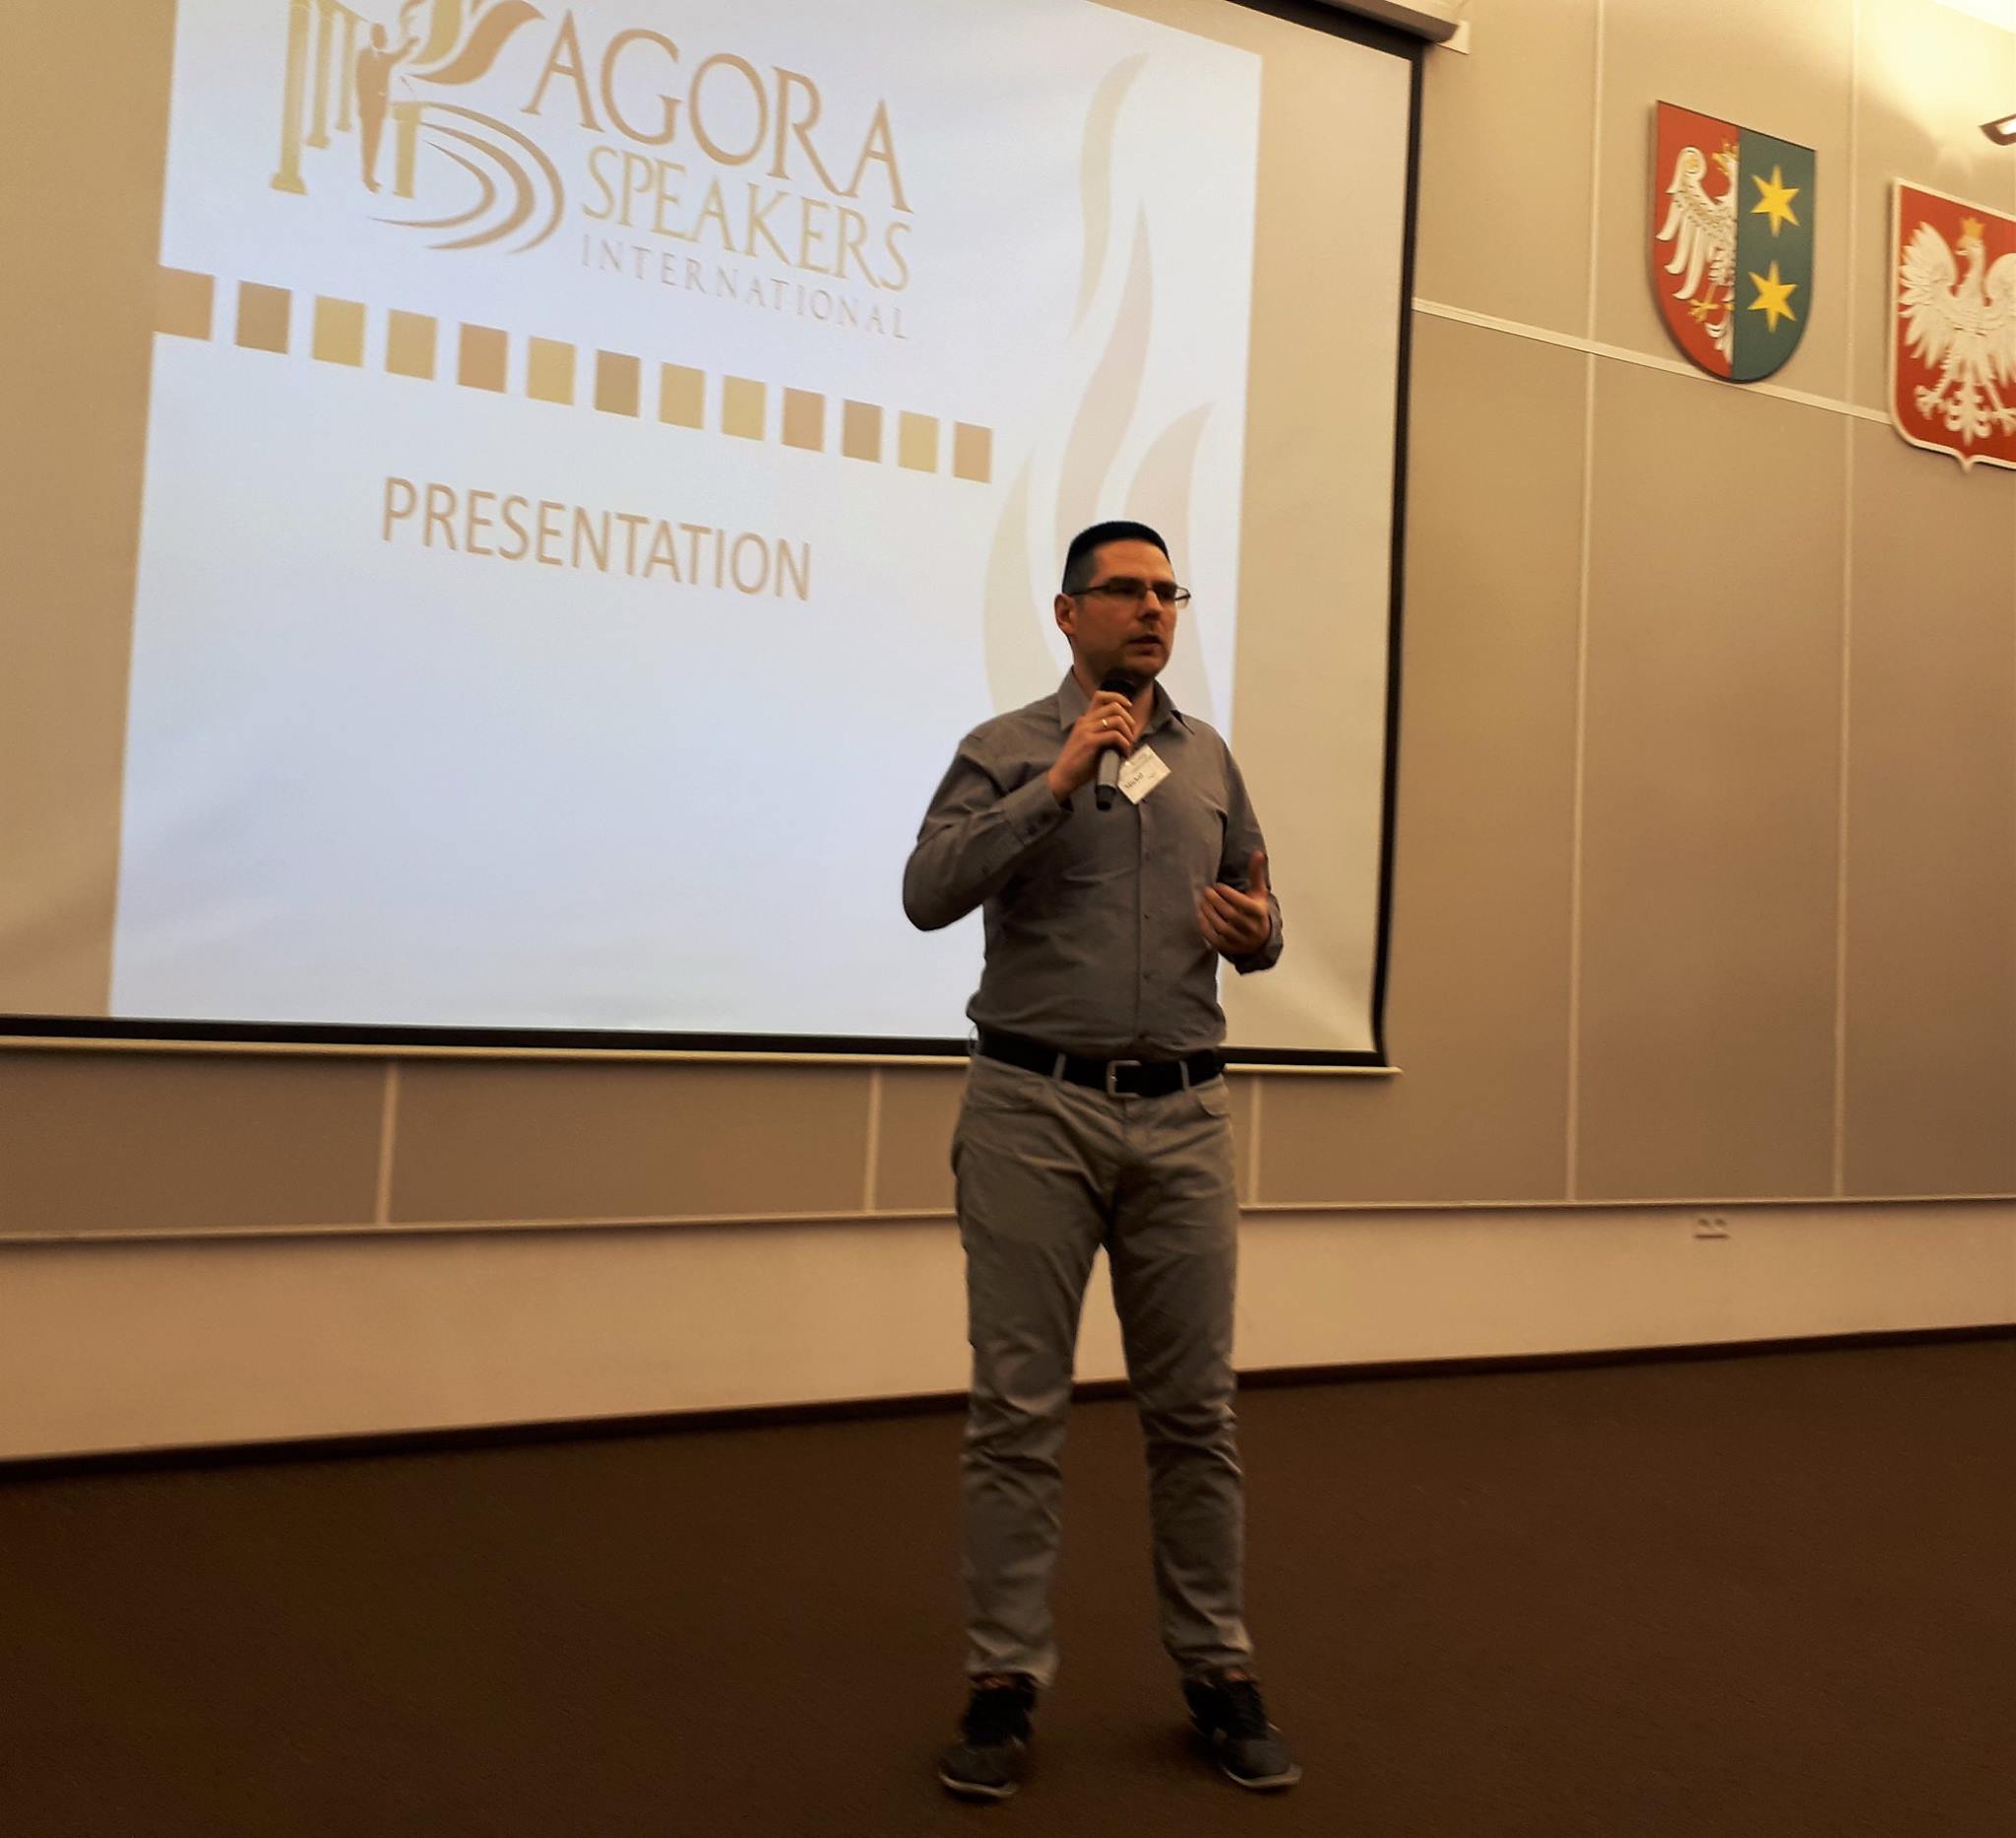 Міхал Папіс, перший Посол Agora Speakers у Польщі. Вересень 2016 року